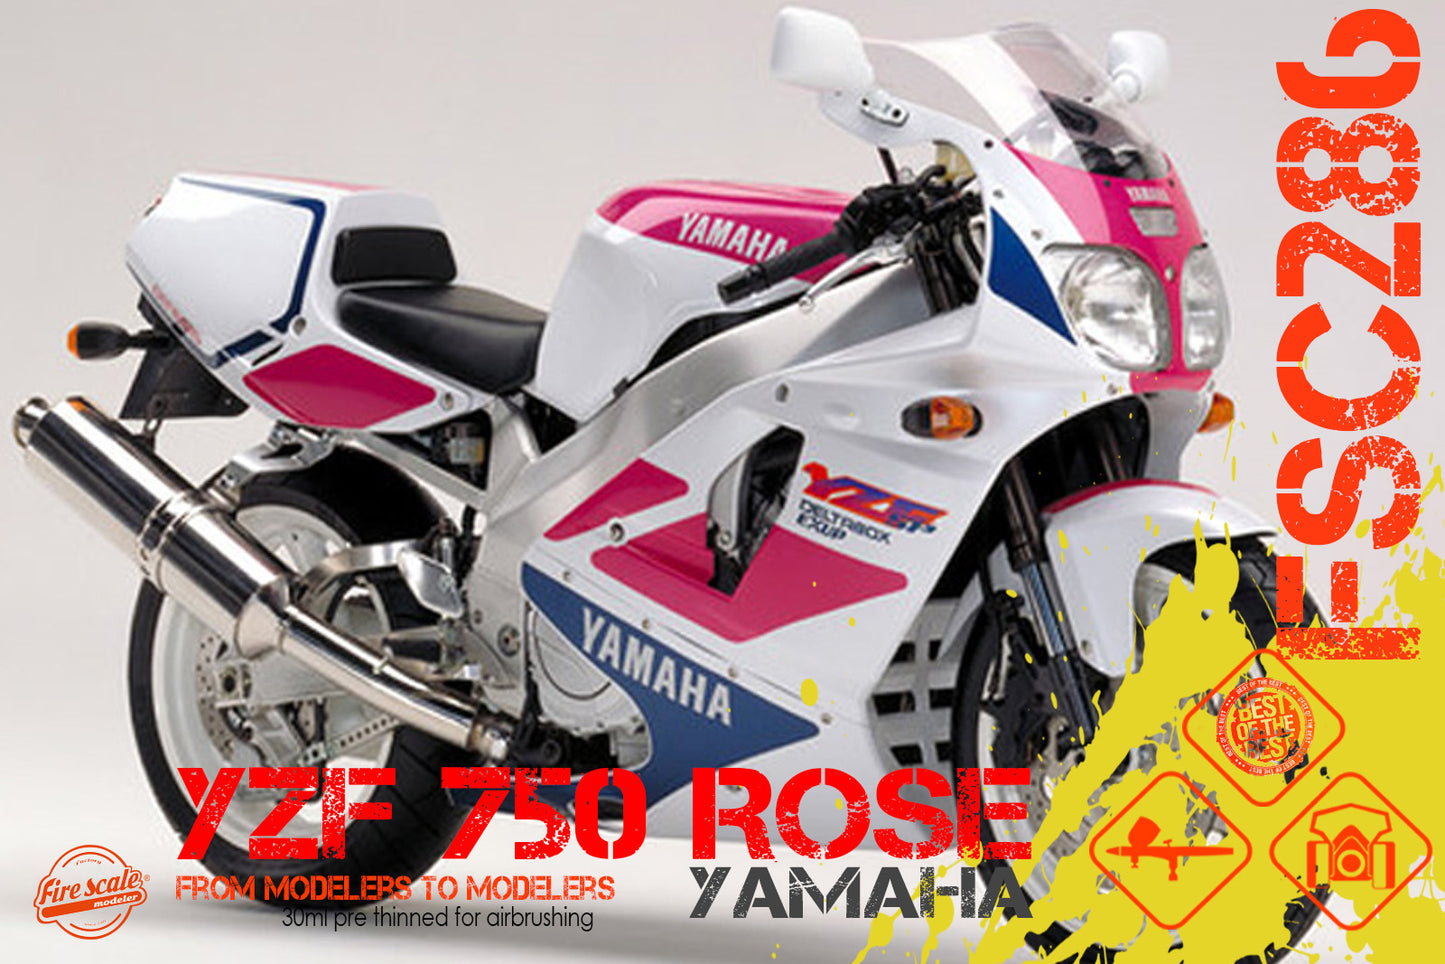 Yamaha YZF 750 Rose